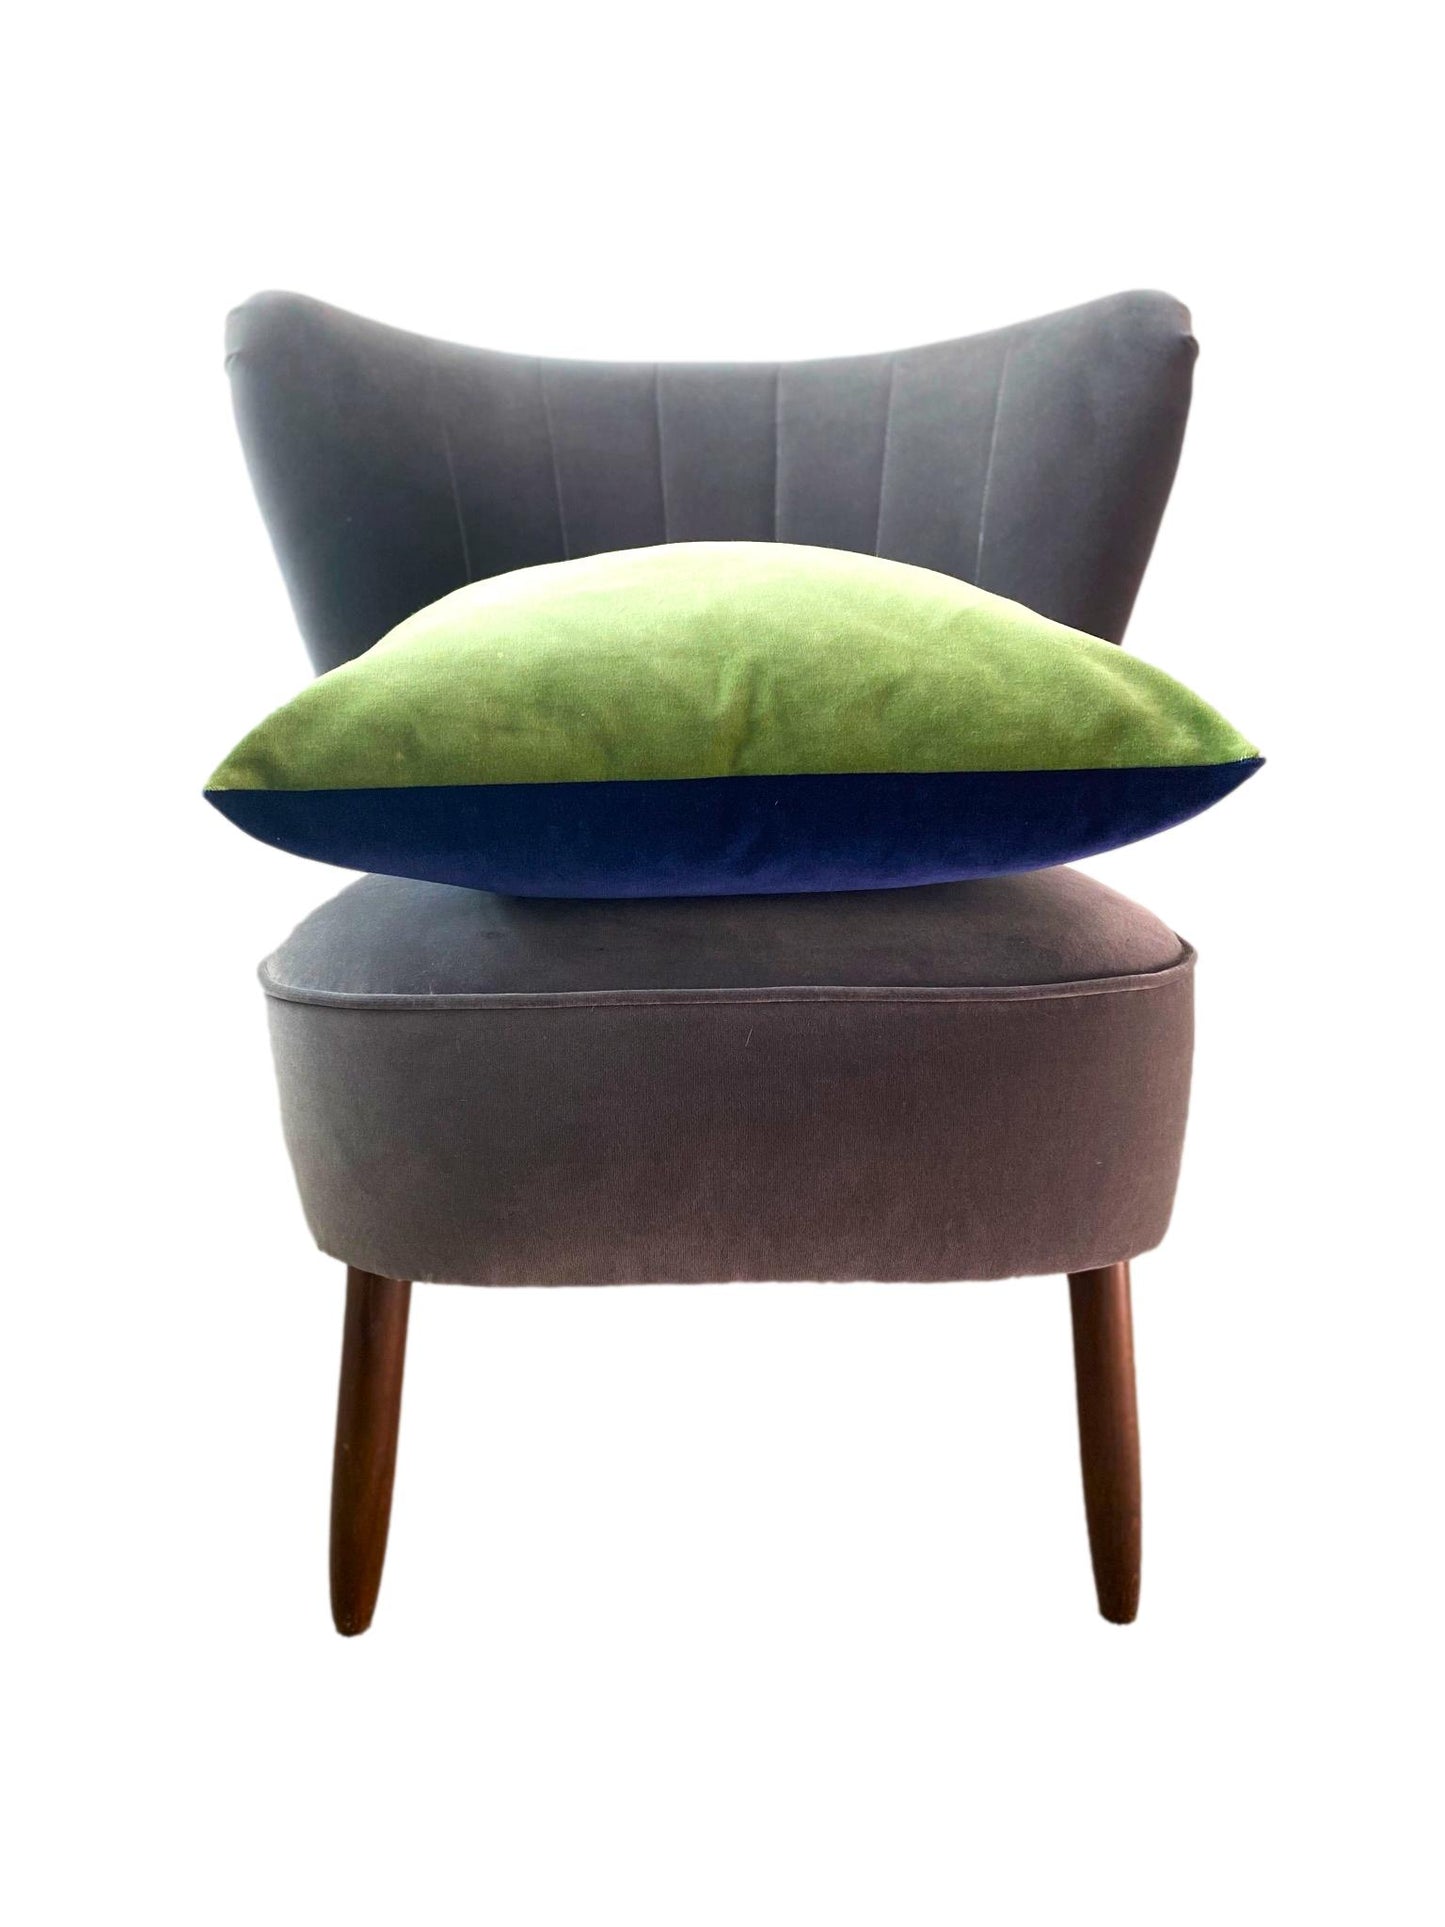 Navy Velvet Cushion with Sage Green